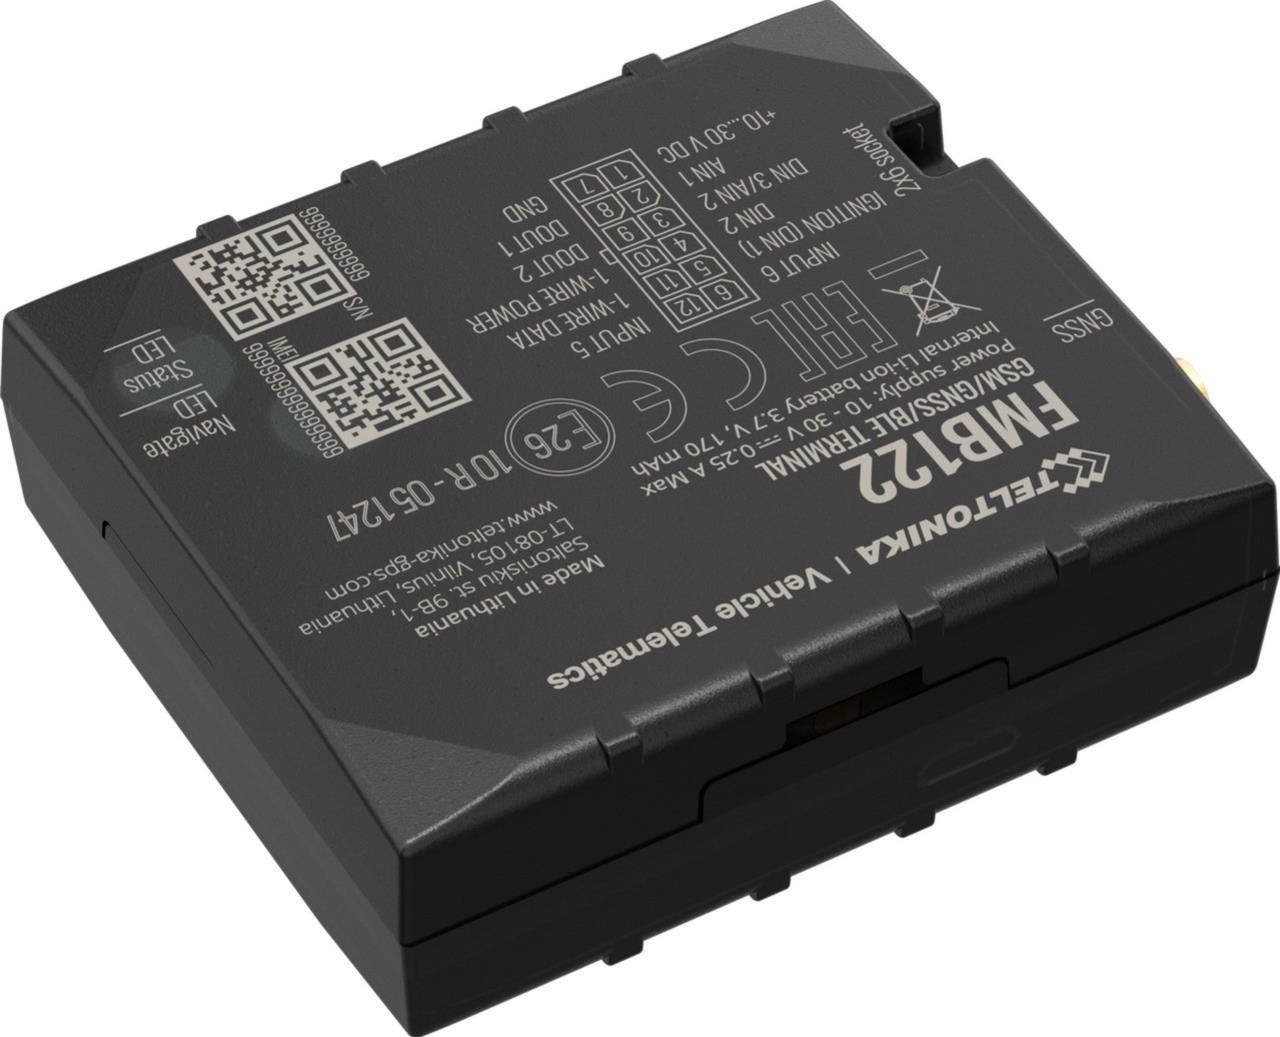 FMB122 GNSS/GSM/Bluetooth Tracker mit externer GNSS/GSM Antenne & Batterie